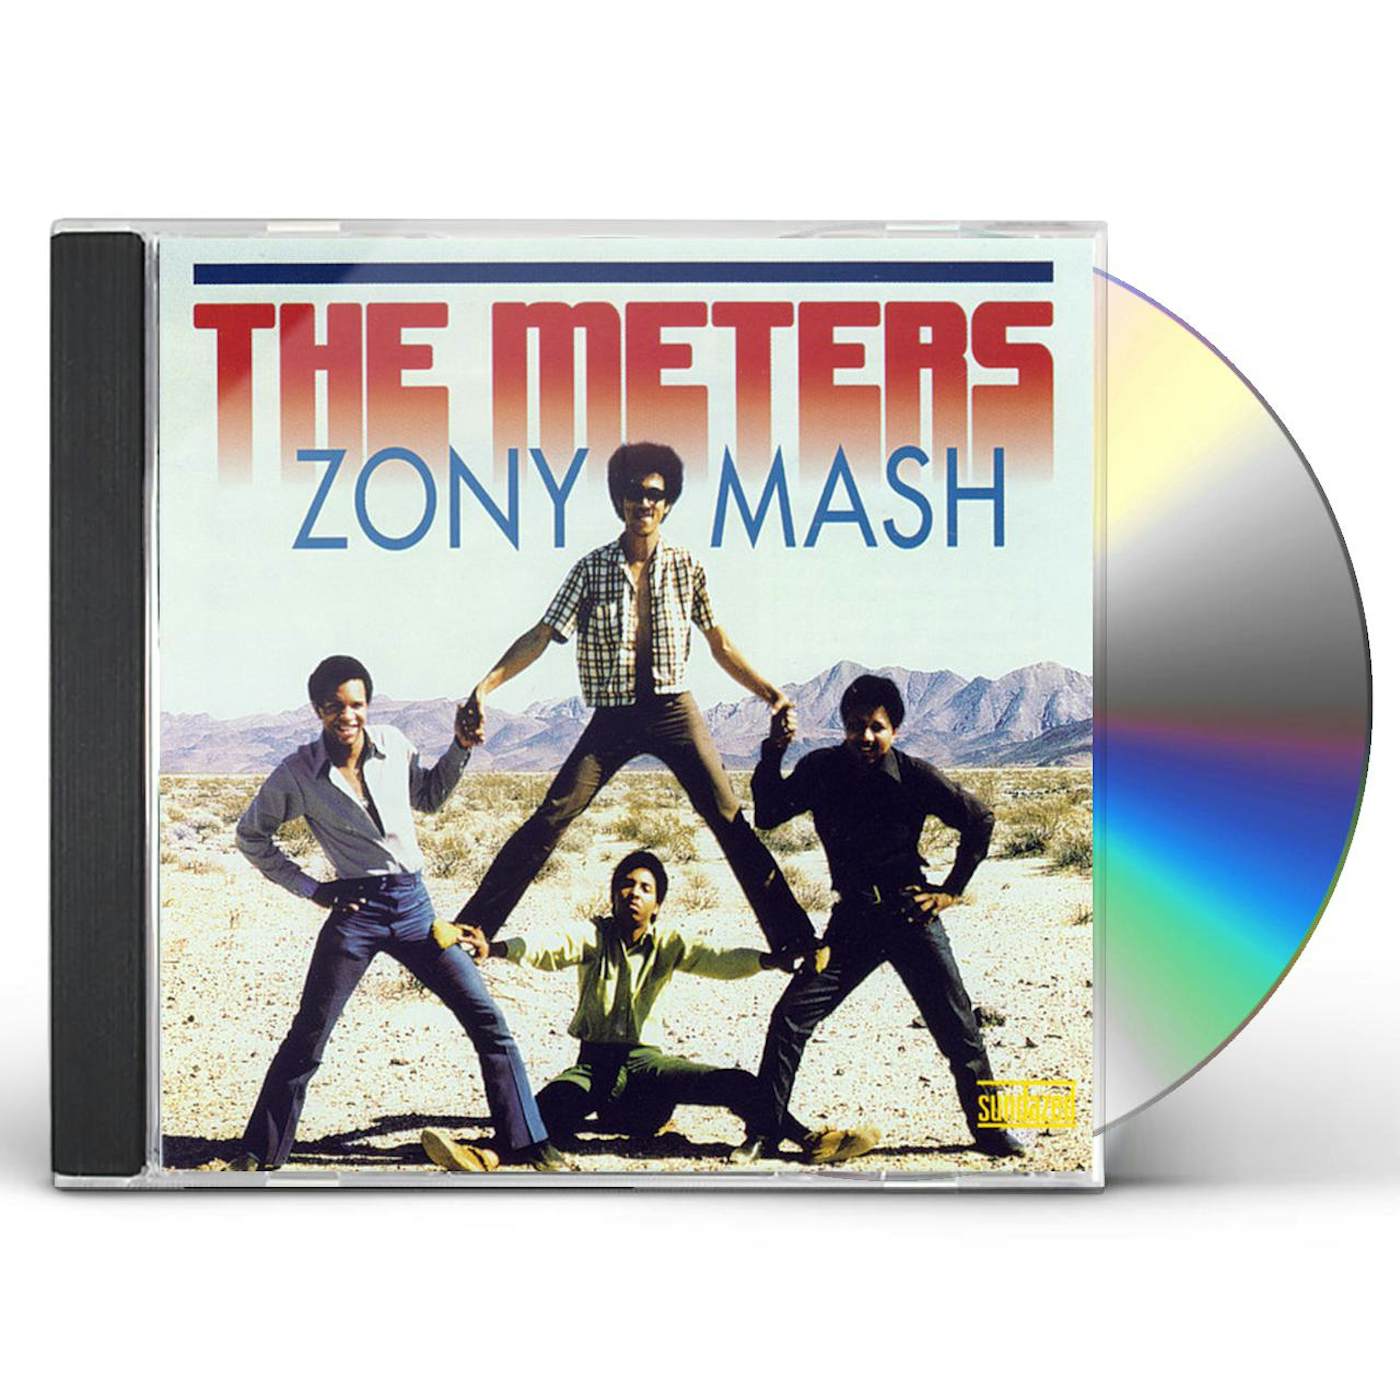 The Meters ZONY MASH CD